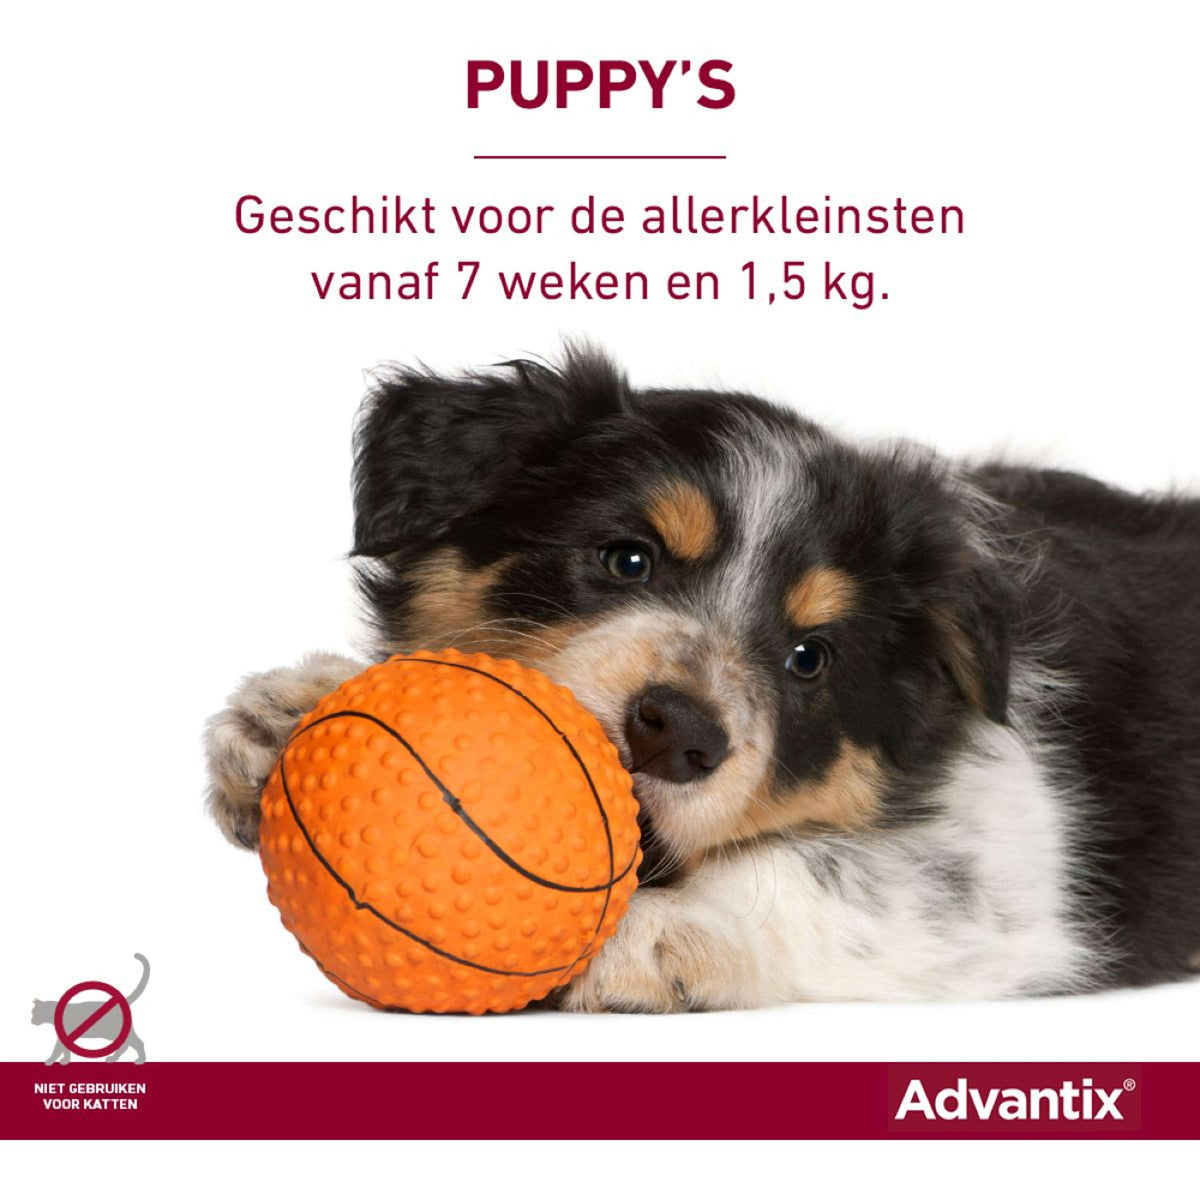 Advantix 40/200 Spot-On Hund < 4kg